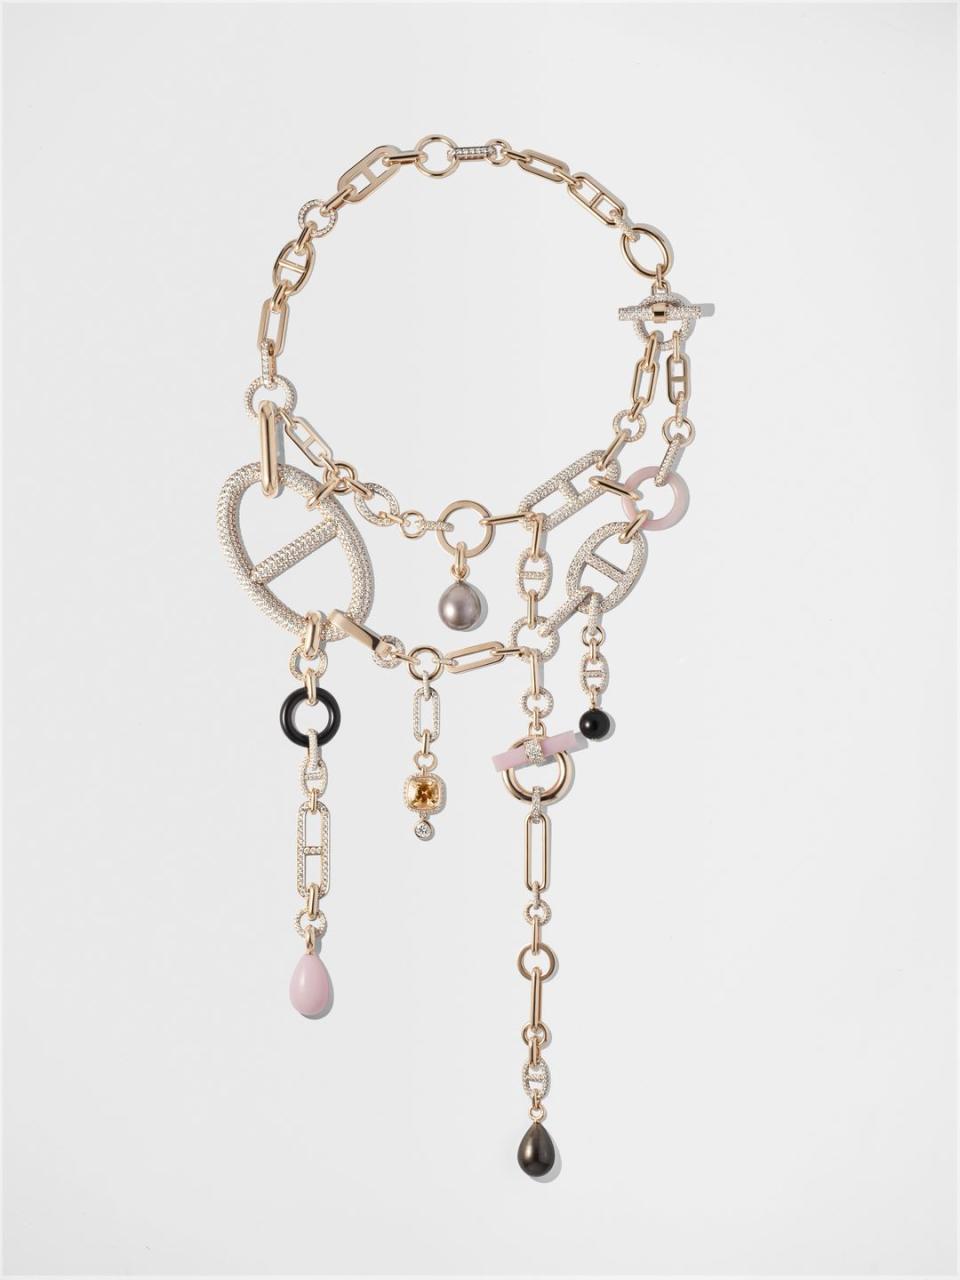 2) Hermès Collier Grand Jeté, with rose gold, diamonds, orange sapphire, black jade, pink opals, grey pearls